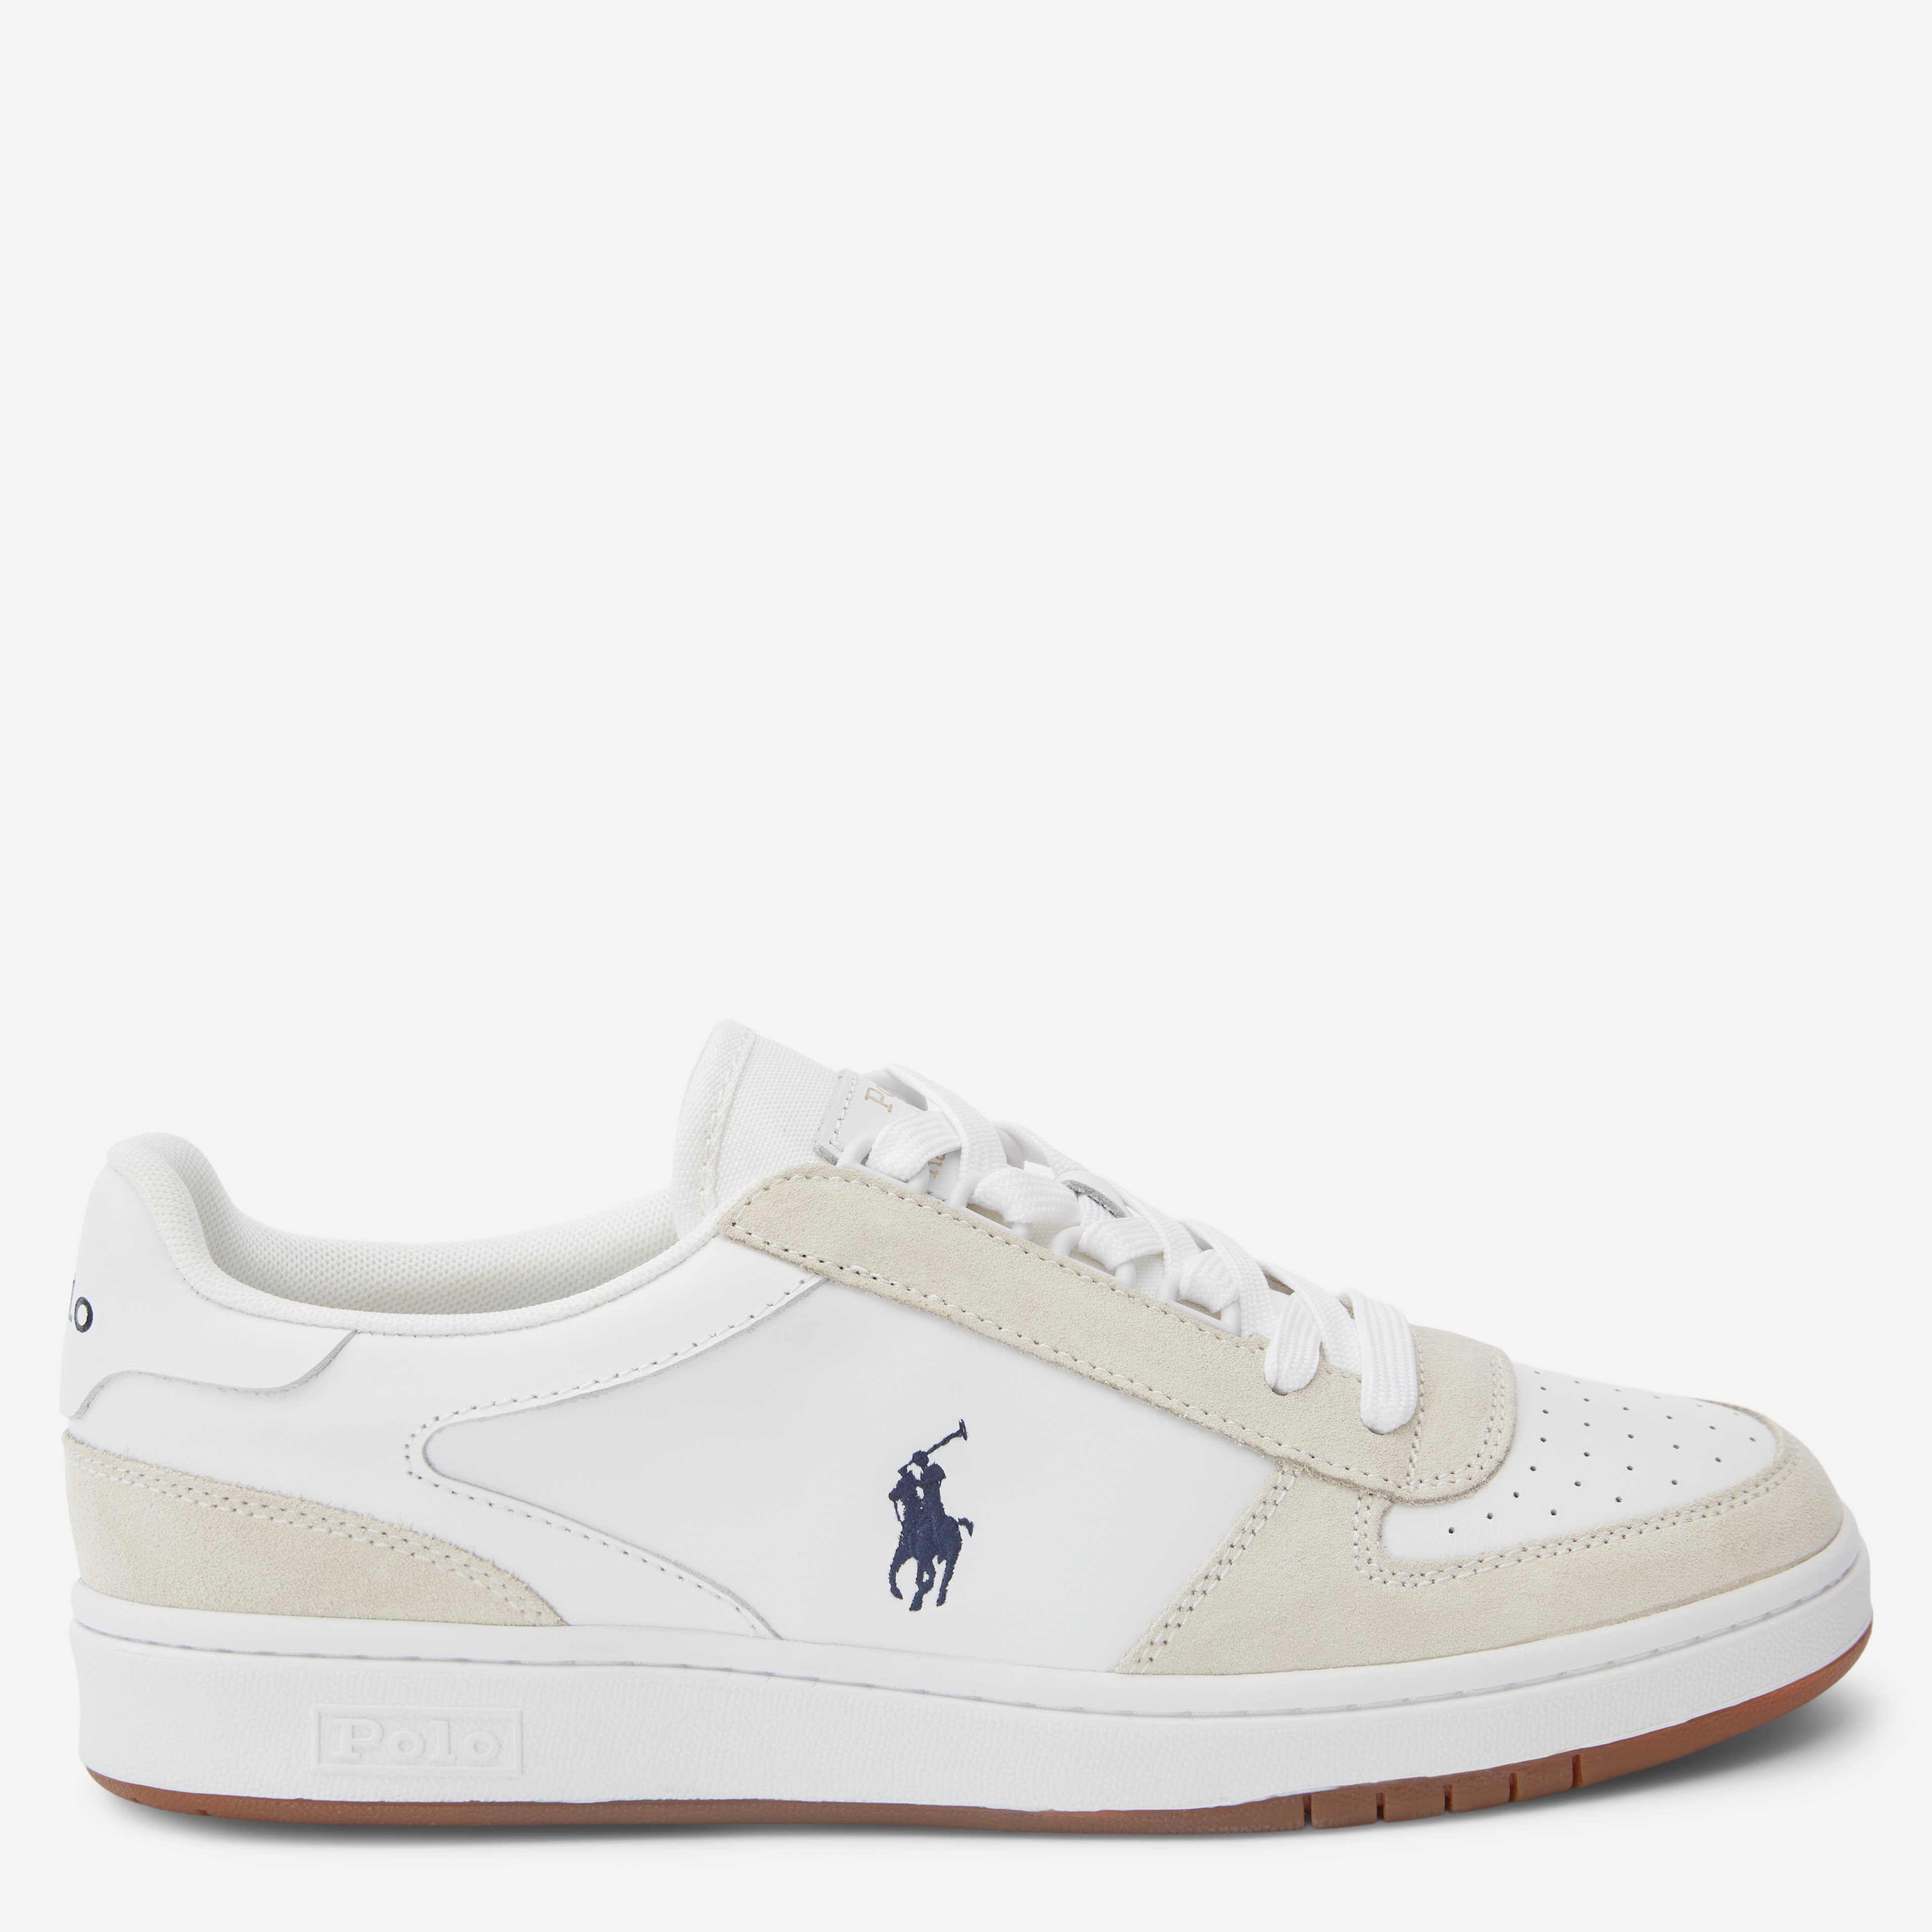 Polo Ralph Lauren Shoes 809834463 White